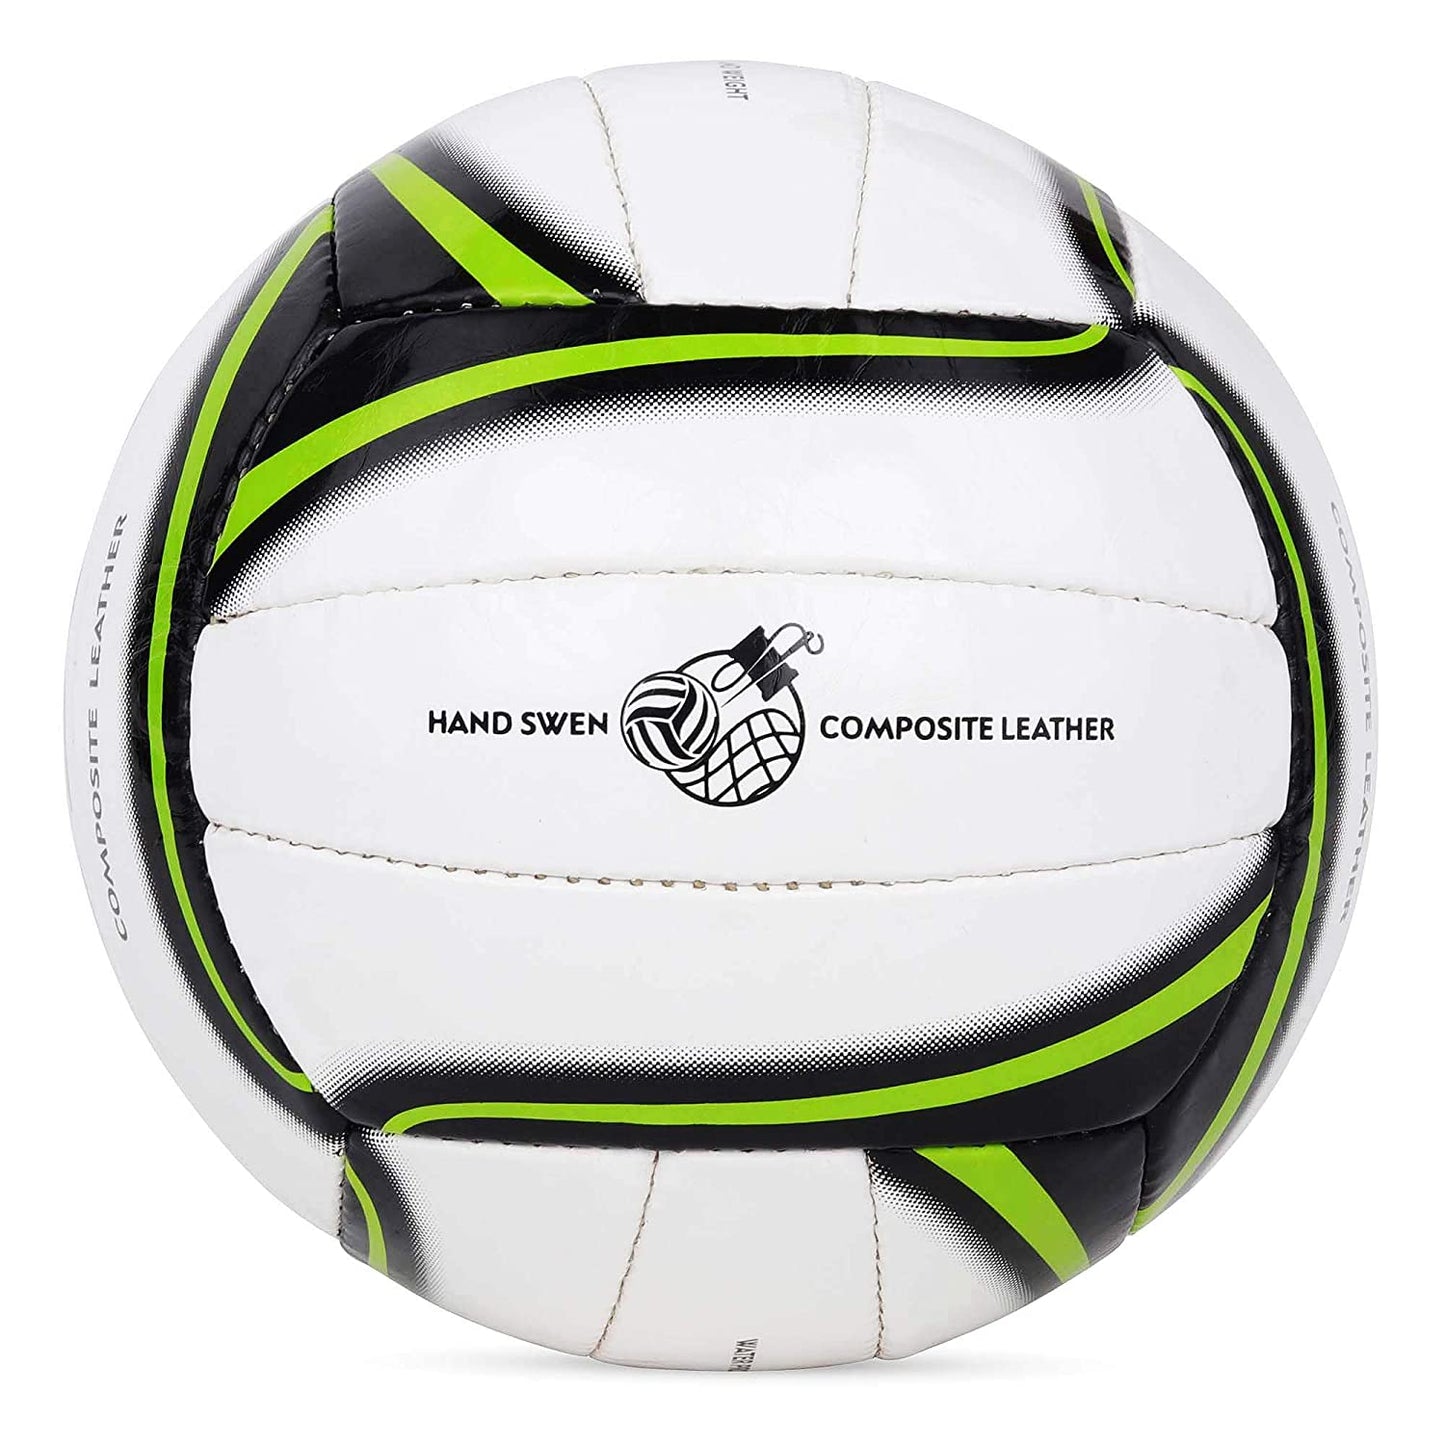 Cosco Champion Volley Ball, Size 4 - Best Price online Prokicksports.com